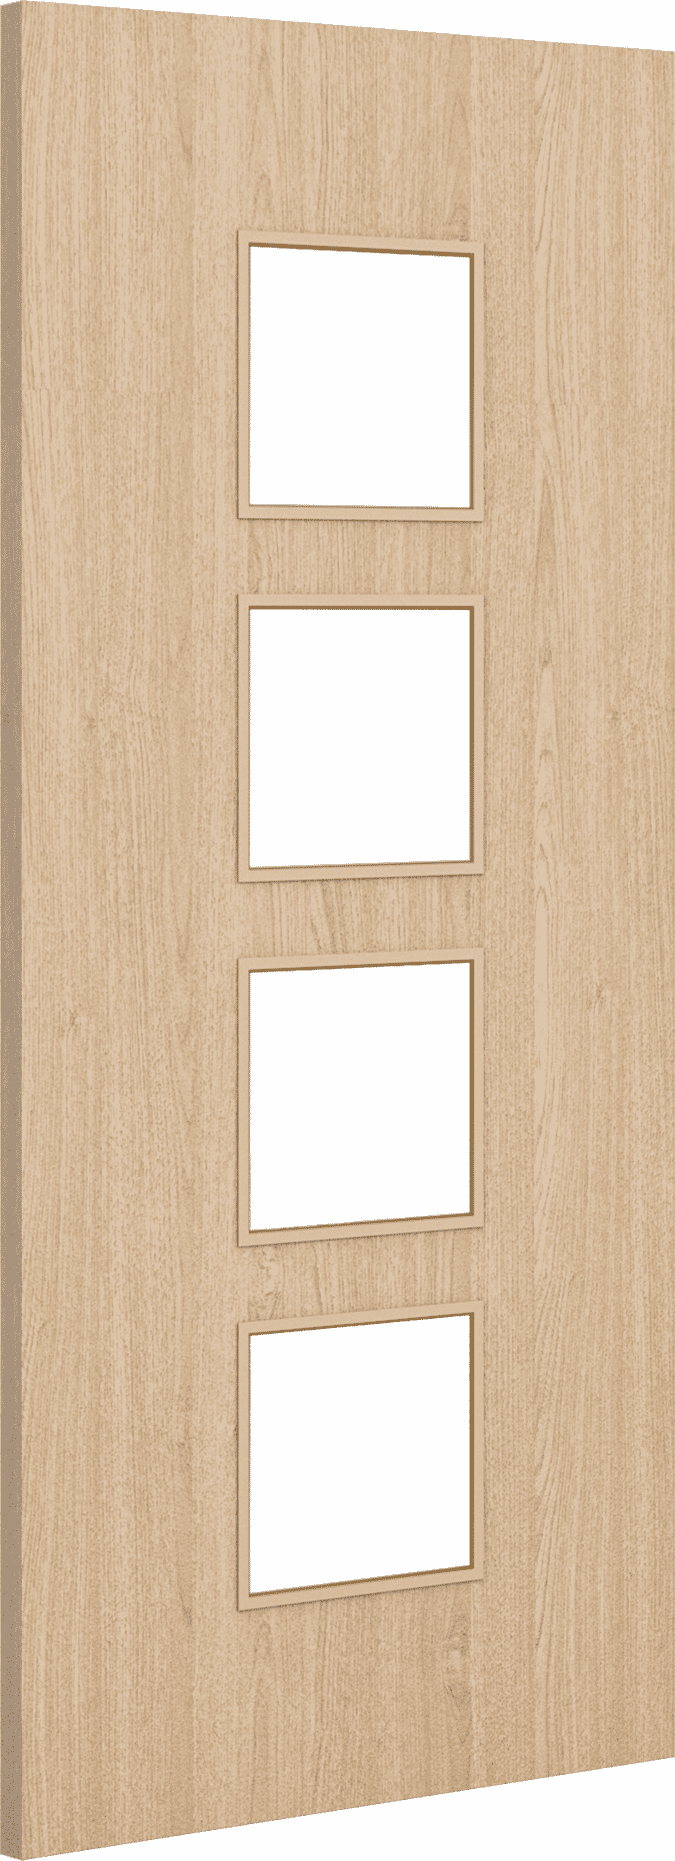 2040mm x 726mm x 44mm Architectural Oak 09 Frosted Glazed - Prefinished FD30 Fire Door Blank